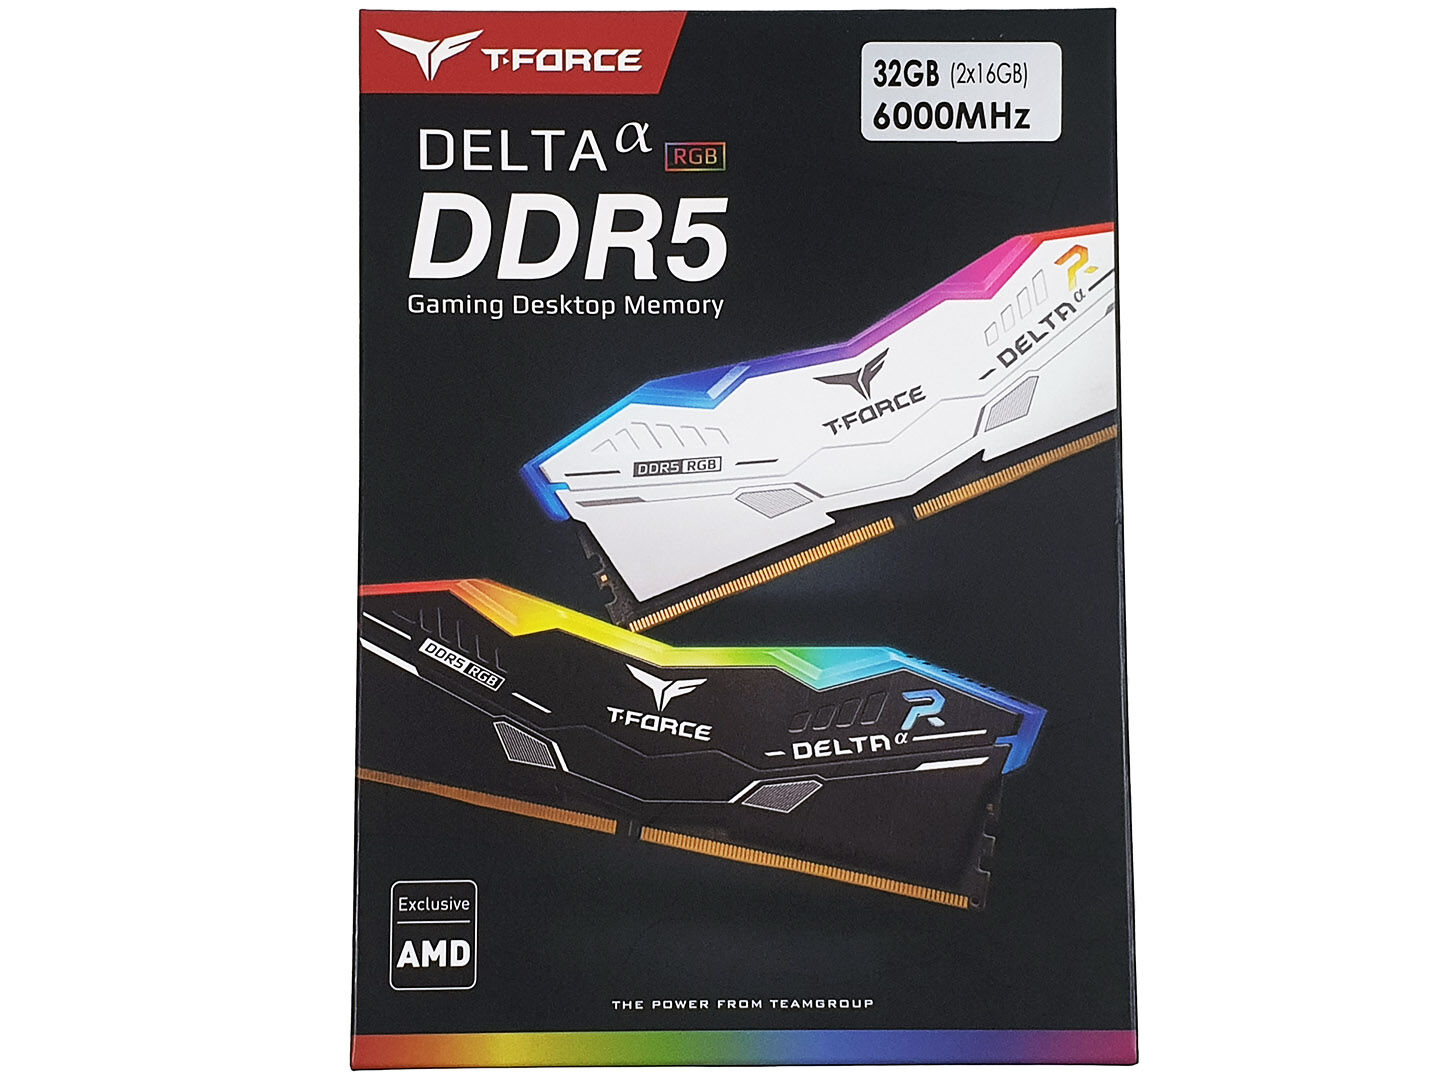 DELTAα RGB DDR5 DESKTOP MEMORY BLACK 32GB(2x16GB) 6000MHz CL30